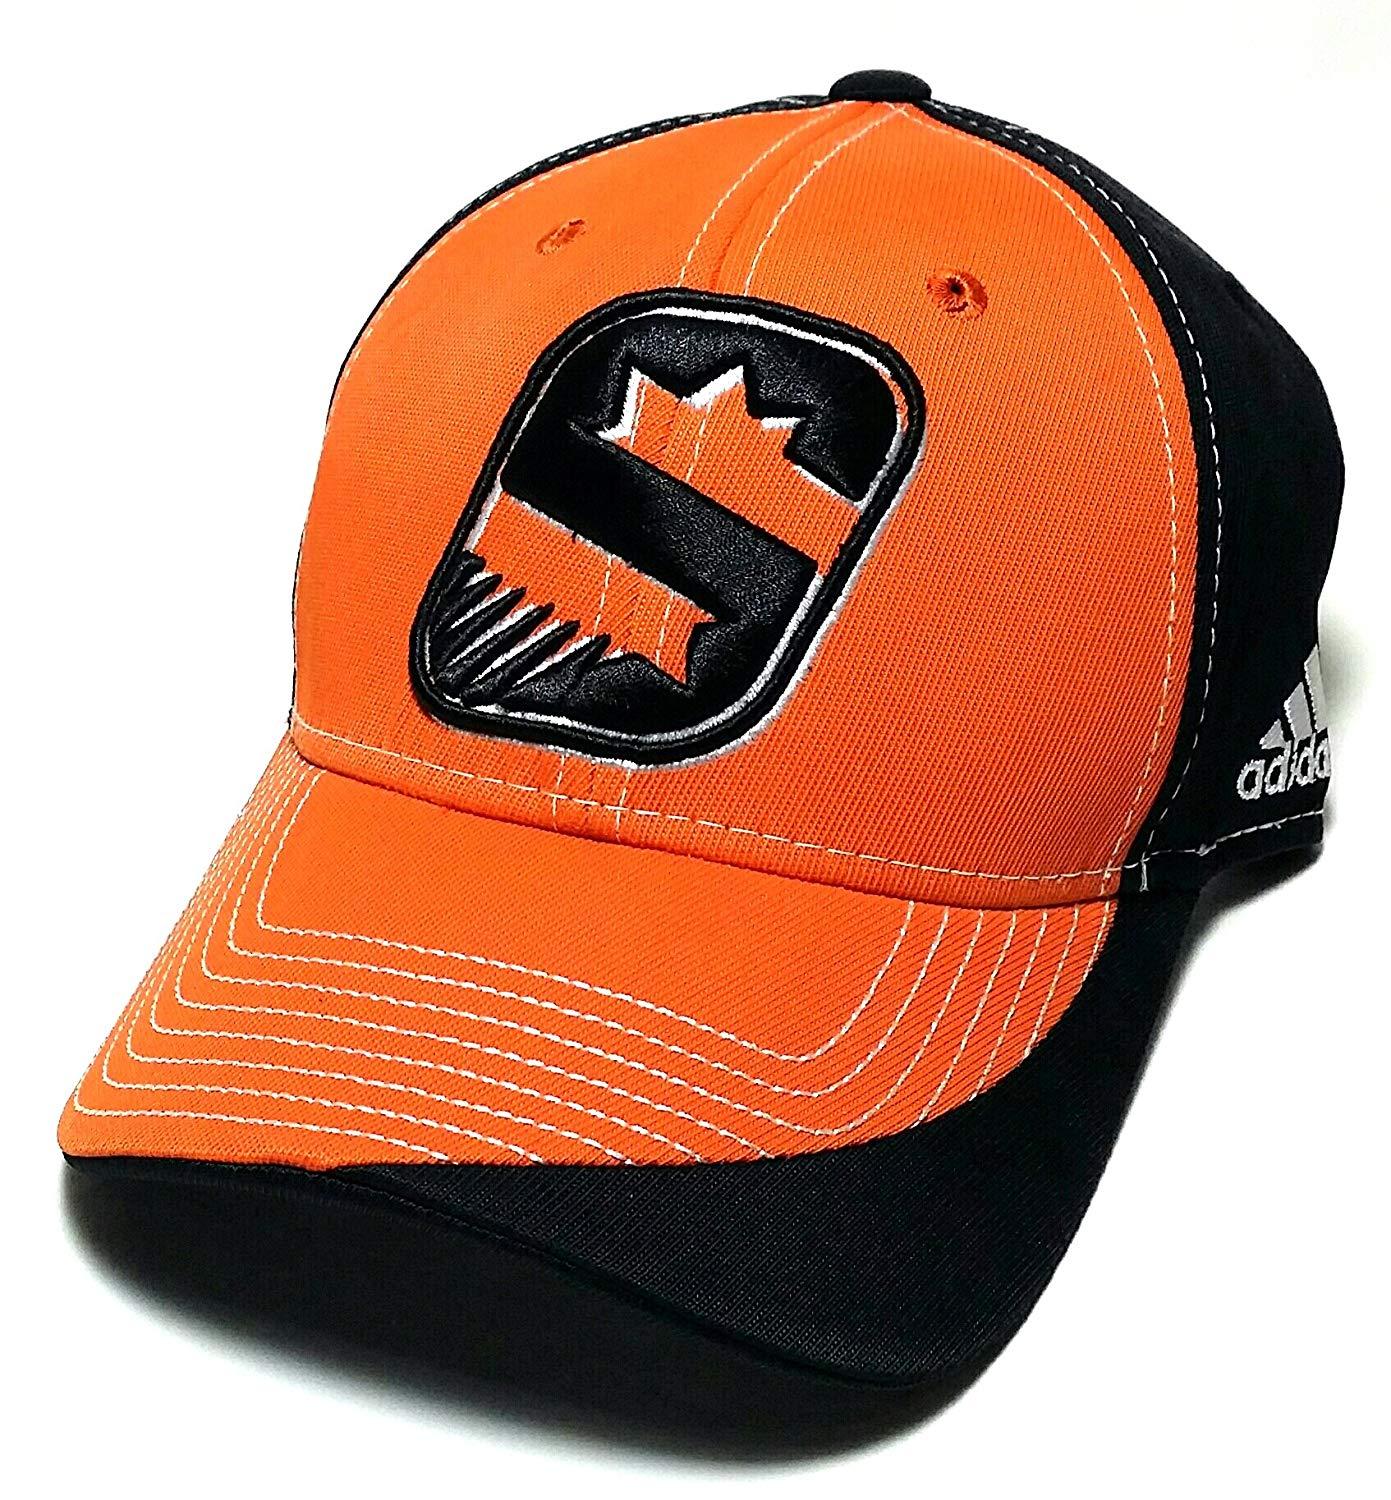 Orange Adidas Logo - Amazon.com : Phoenix Suns PHX NBA Adidas Alternate 3rd Logo Black ...